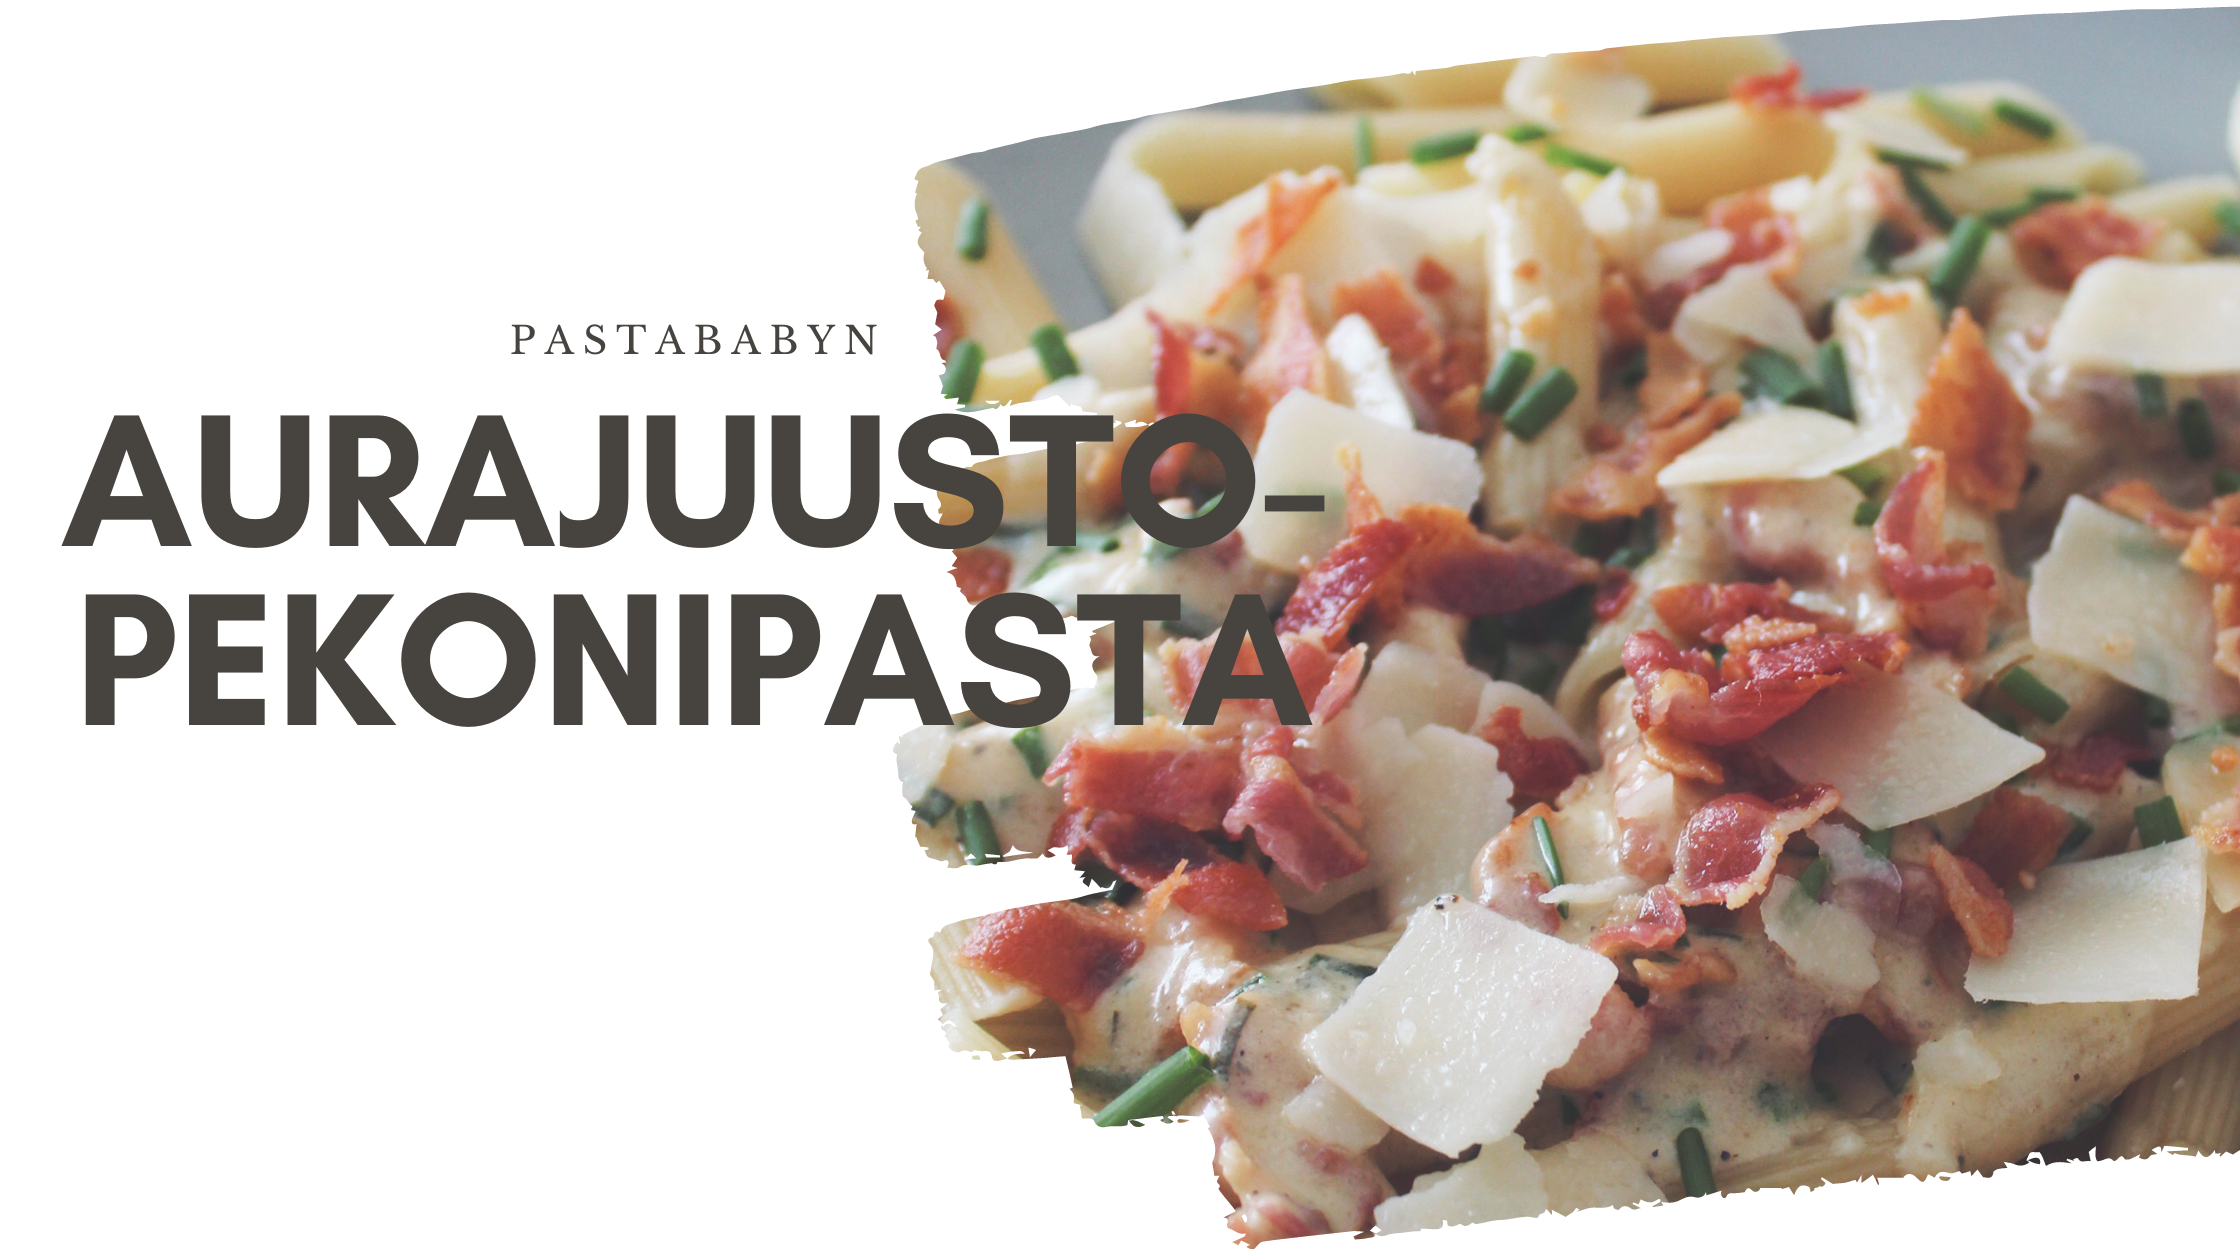 Reseptikirja: Aurajuusto-pekonipasta – pastababy | Lily